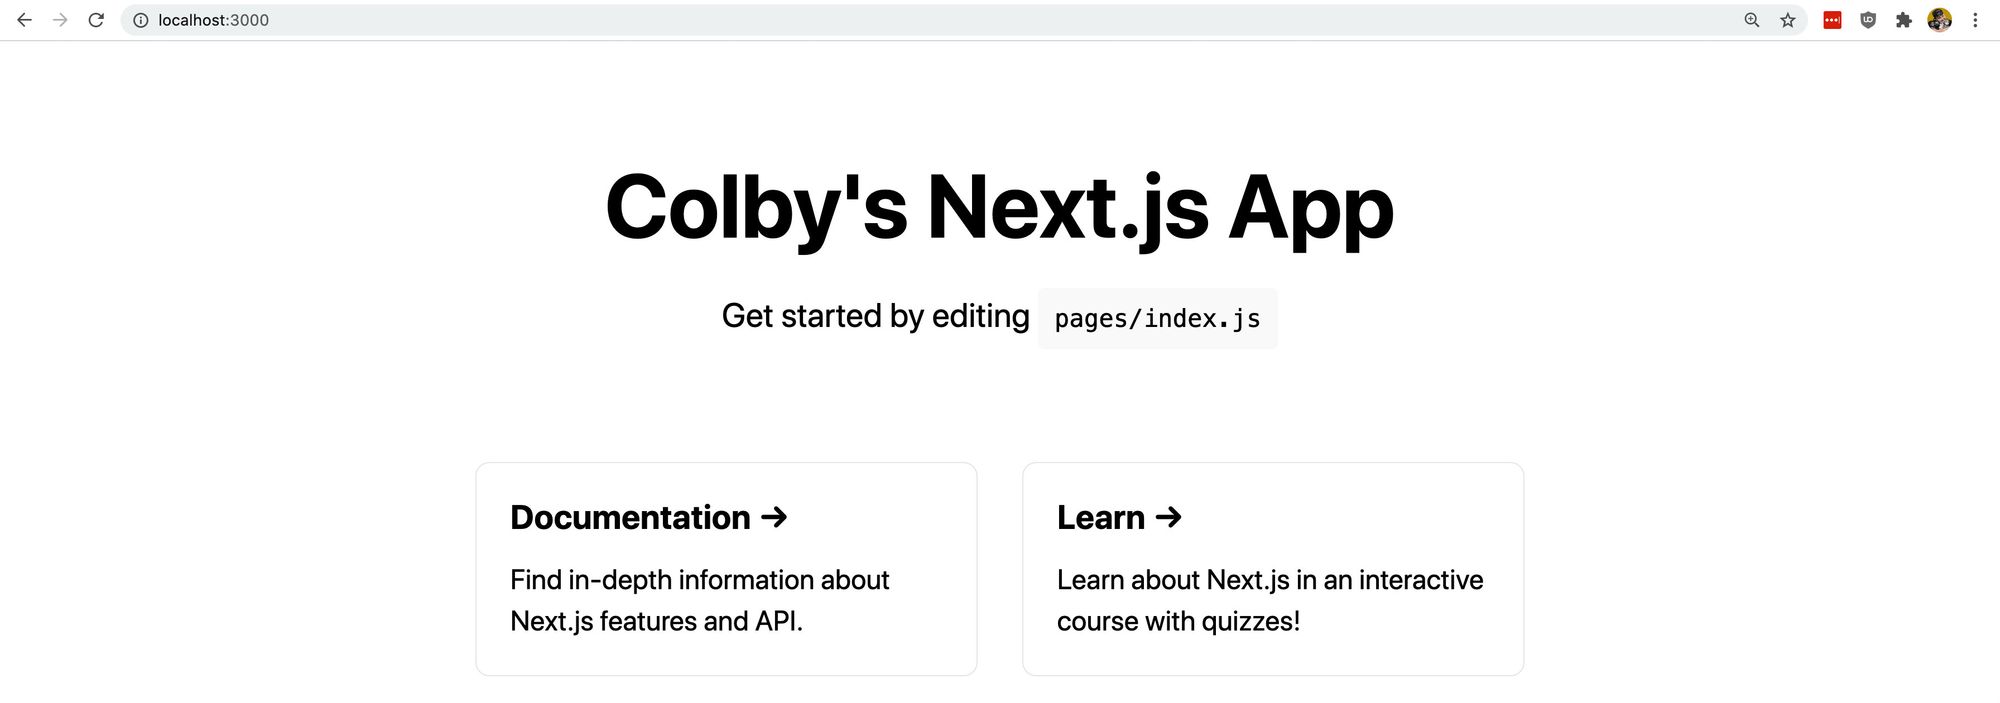 colbys-nextjs-app